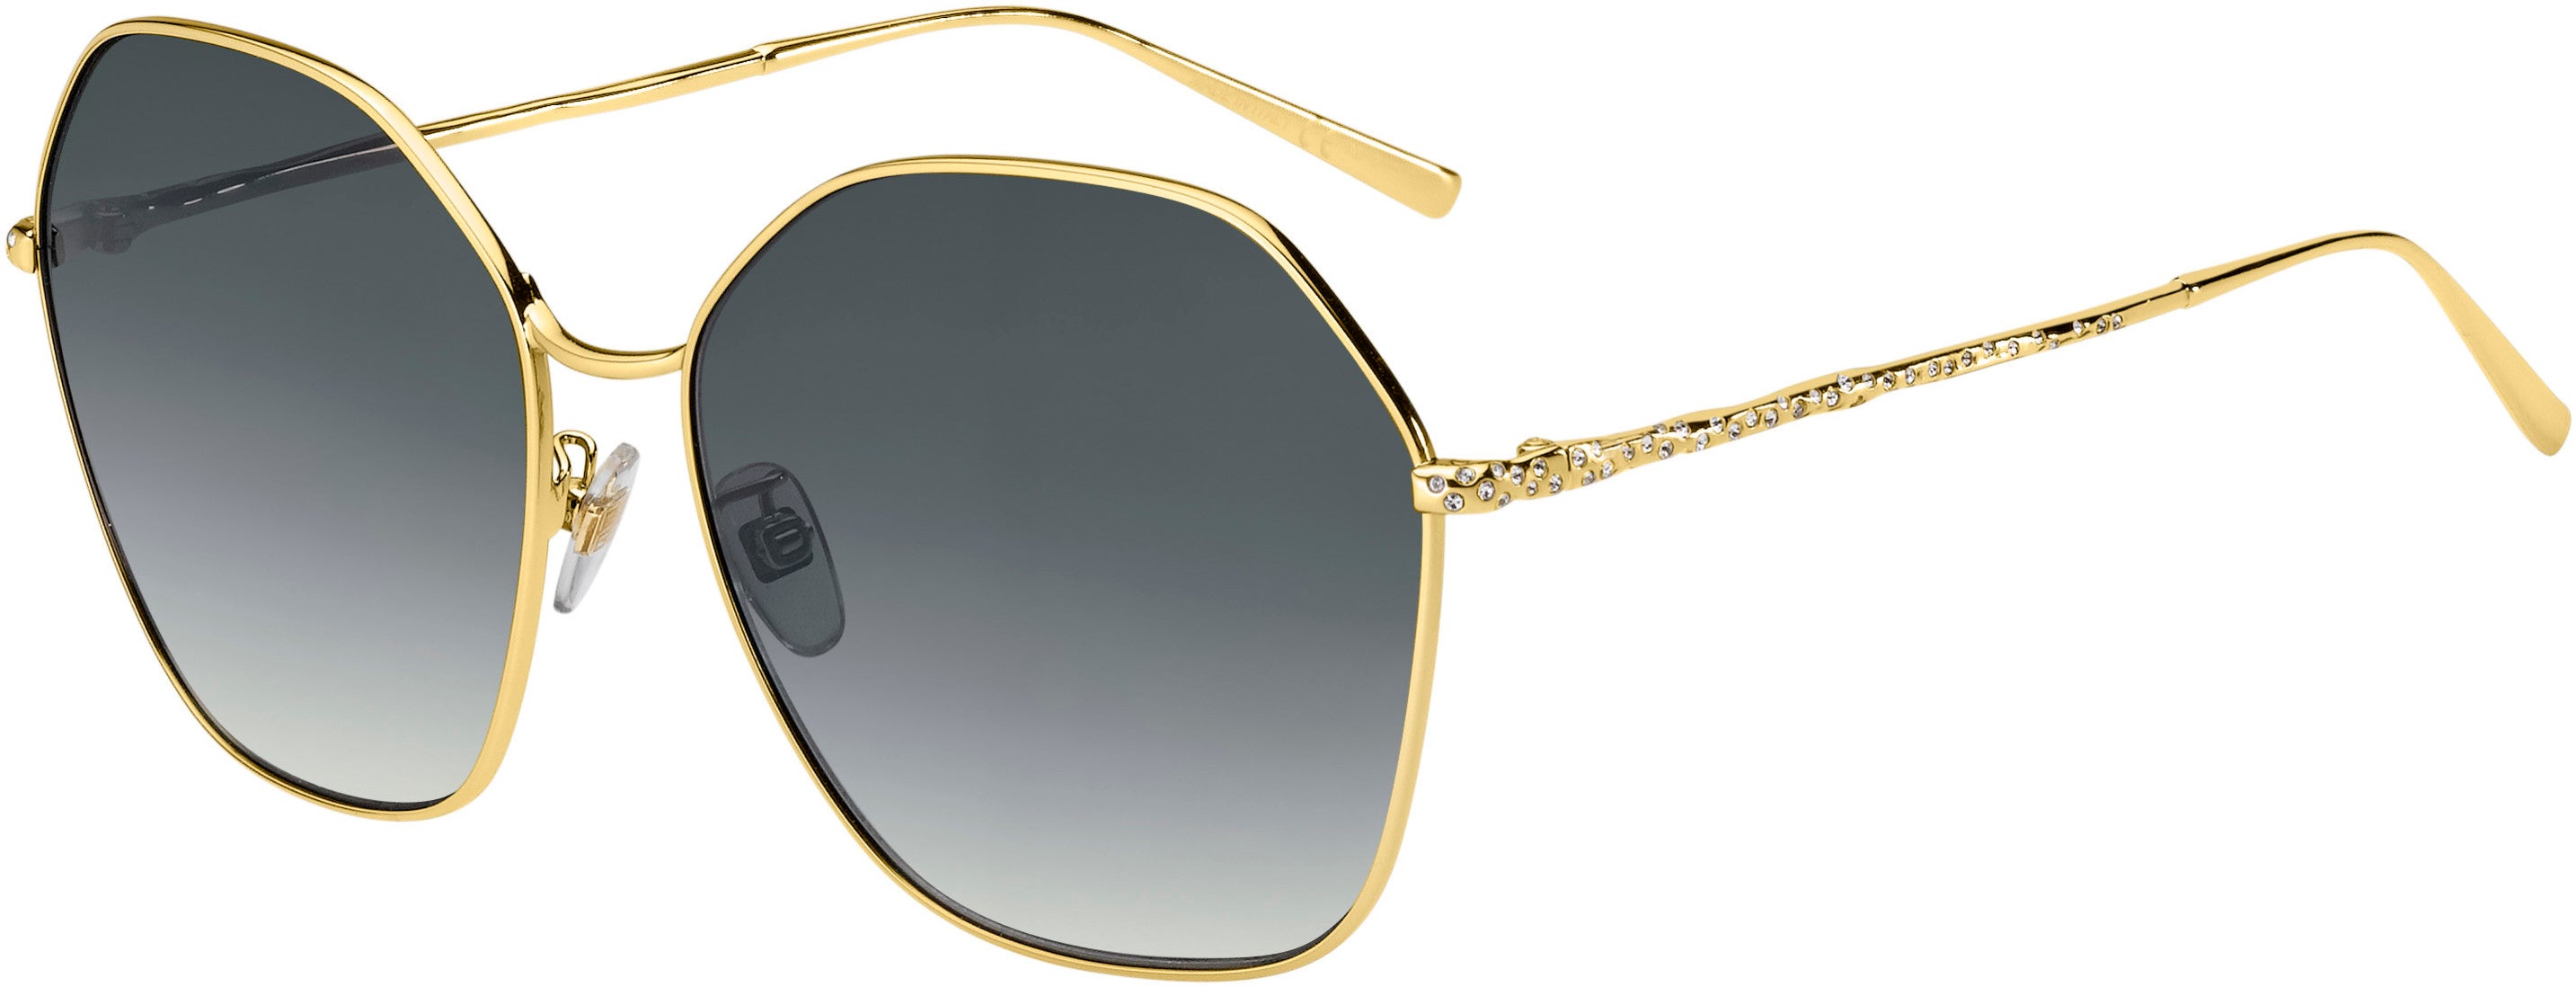  Givenchy 7171/G/S Special Shape Sunglasses 0J5G-0J5G  Gold (9O Dark Gray Gradient)